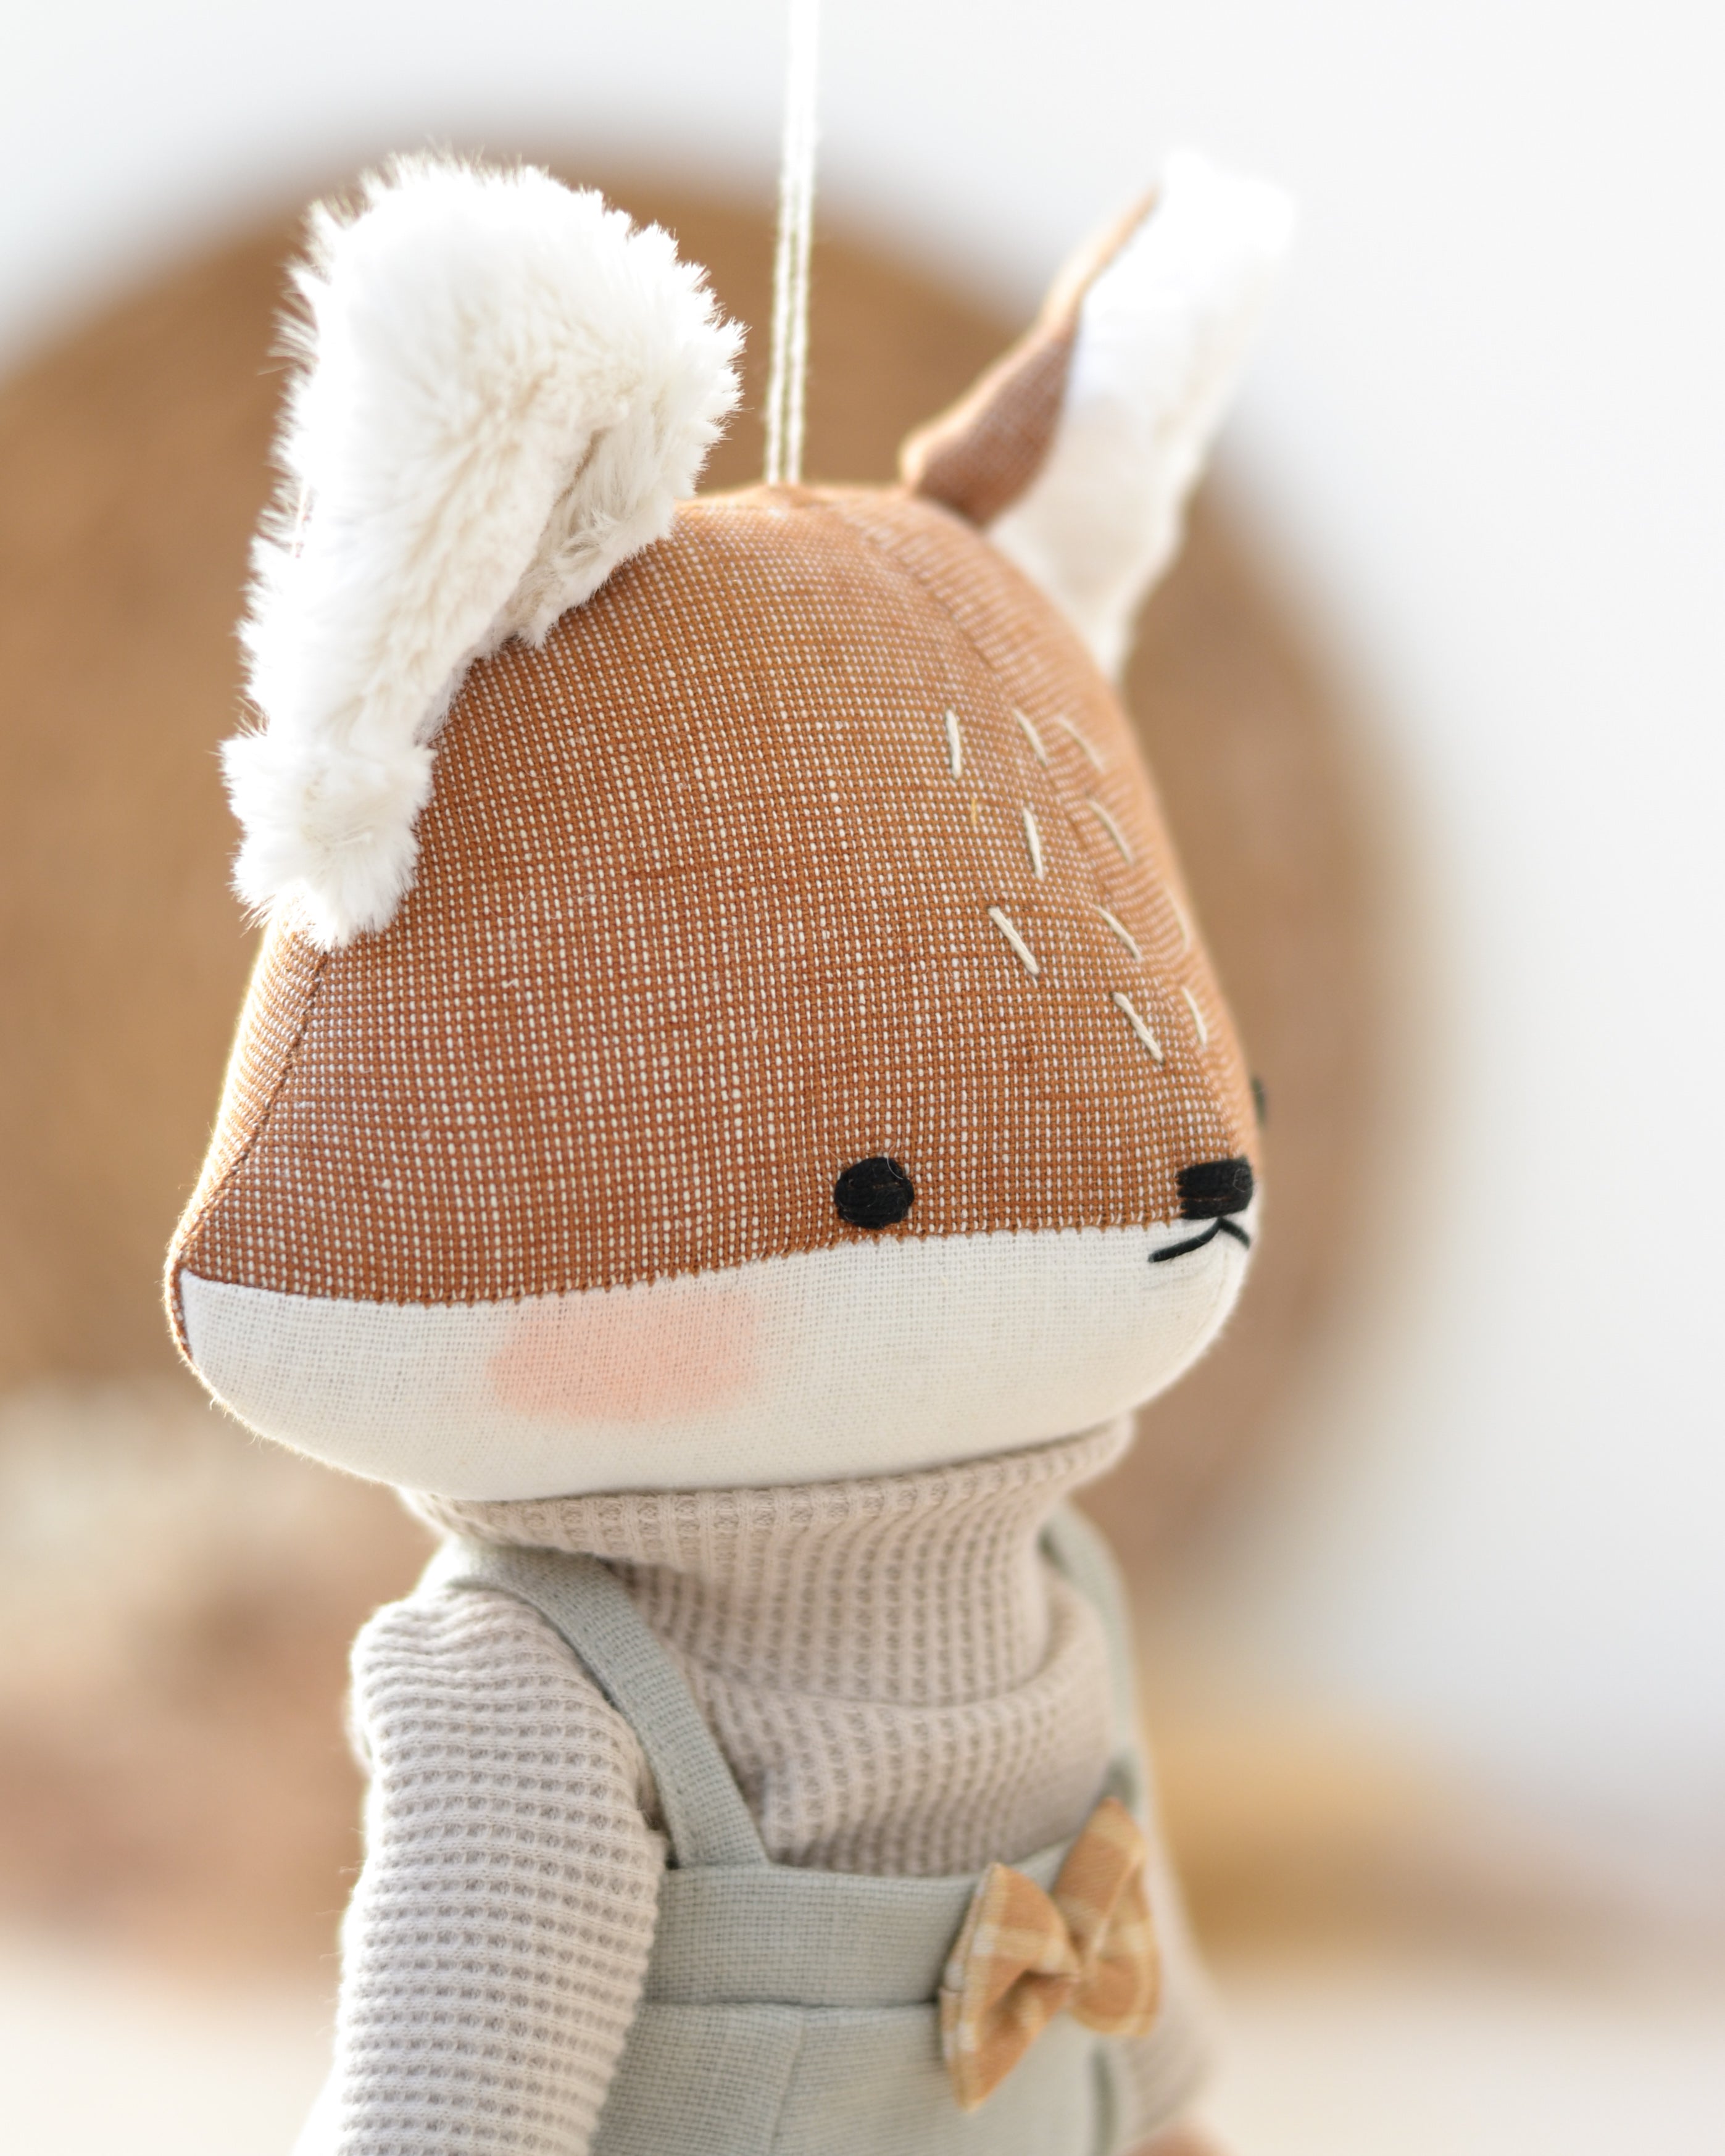 Sewing Pattern - Fox doll